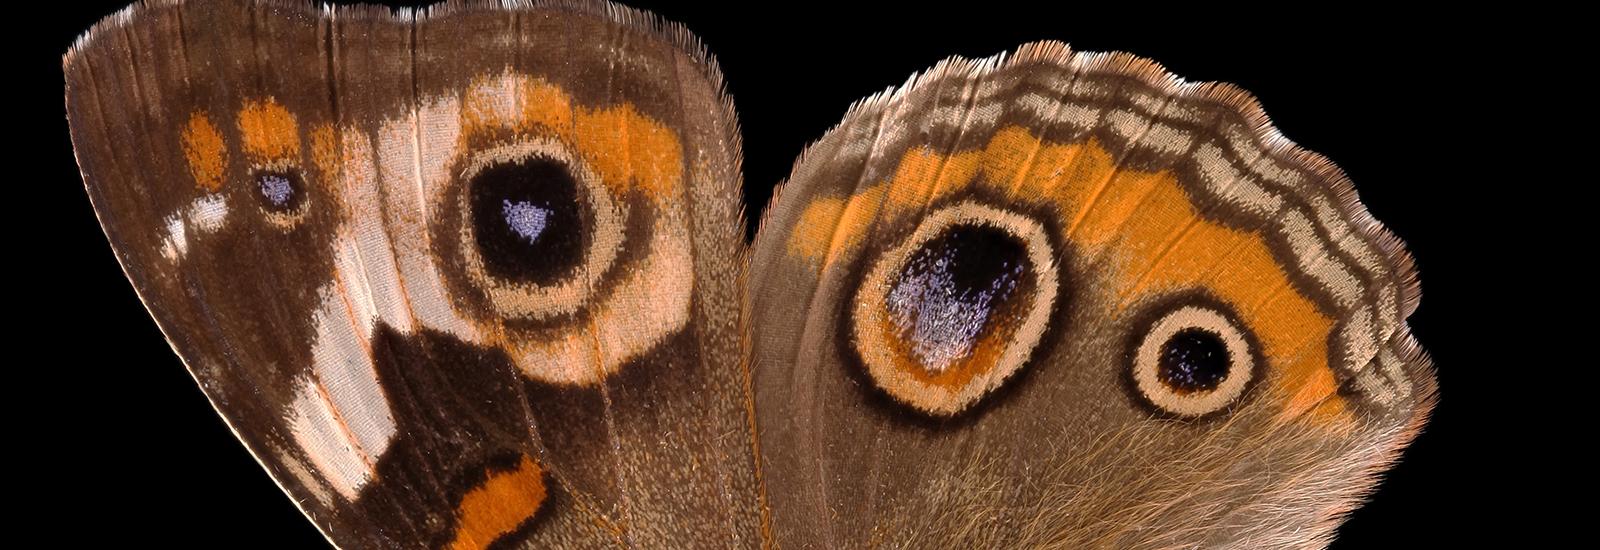 Common Buckeye Butterfly (Junonia coenia)